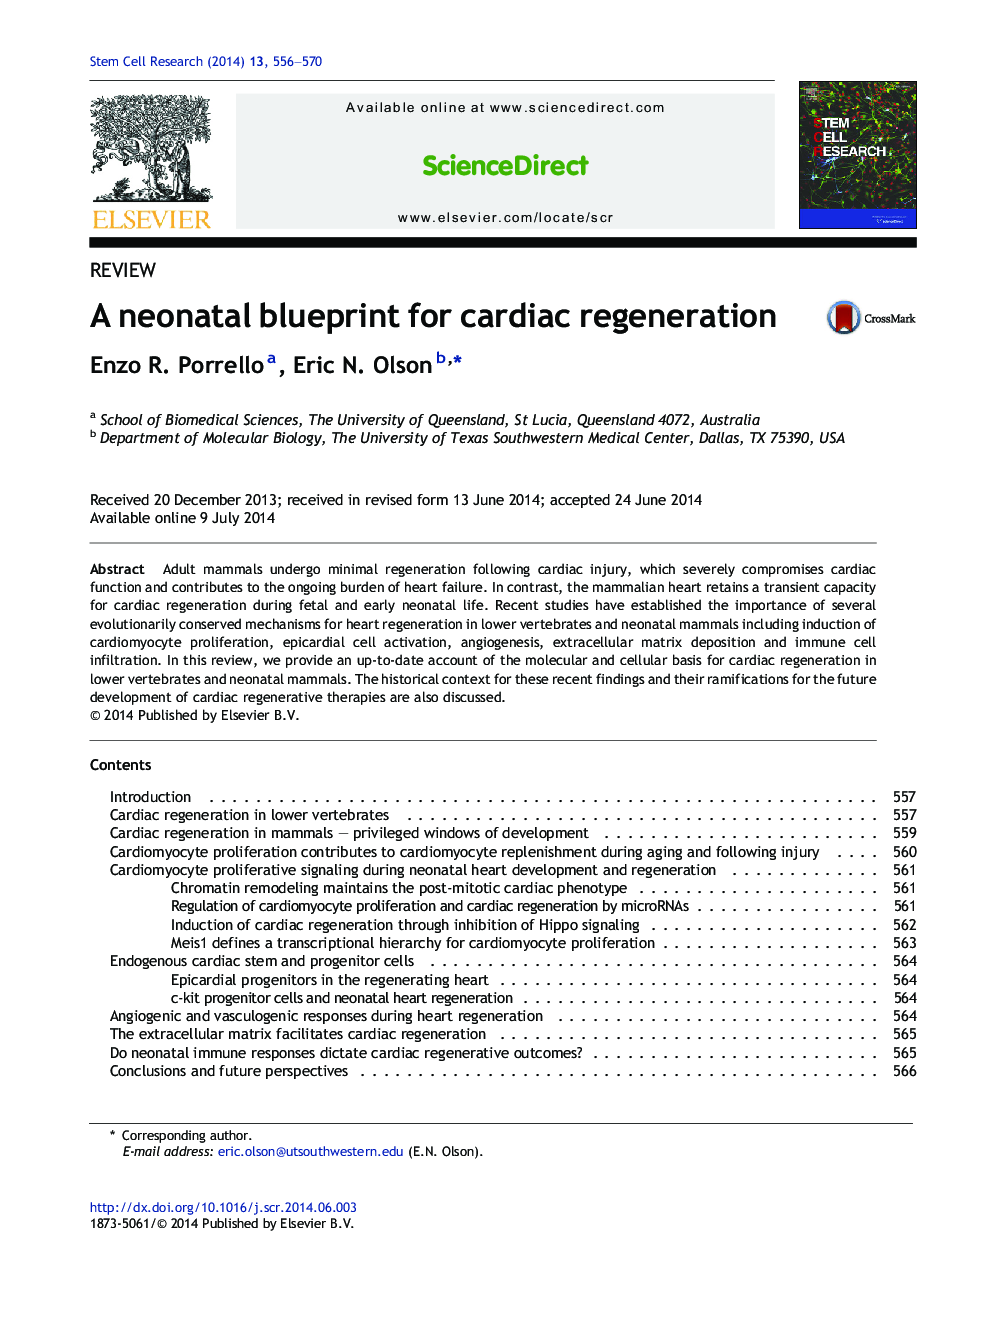 A neonatal blueprint for cardiac regeneration